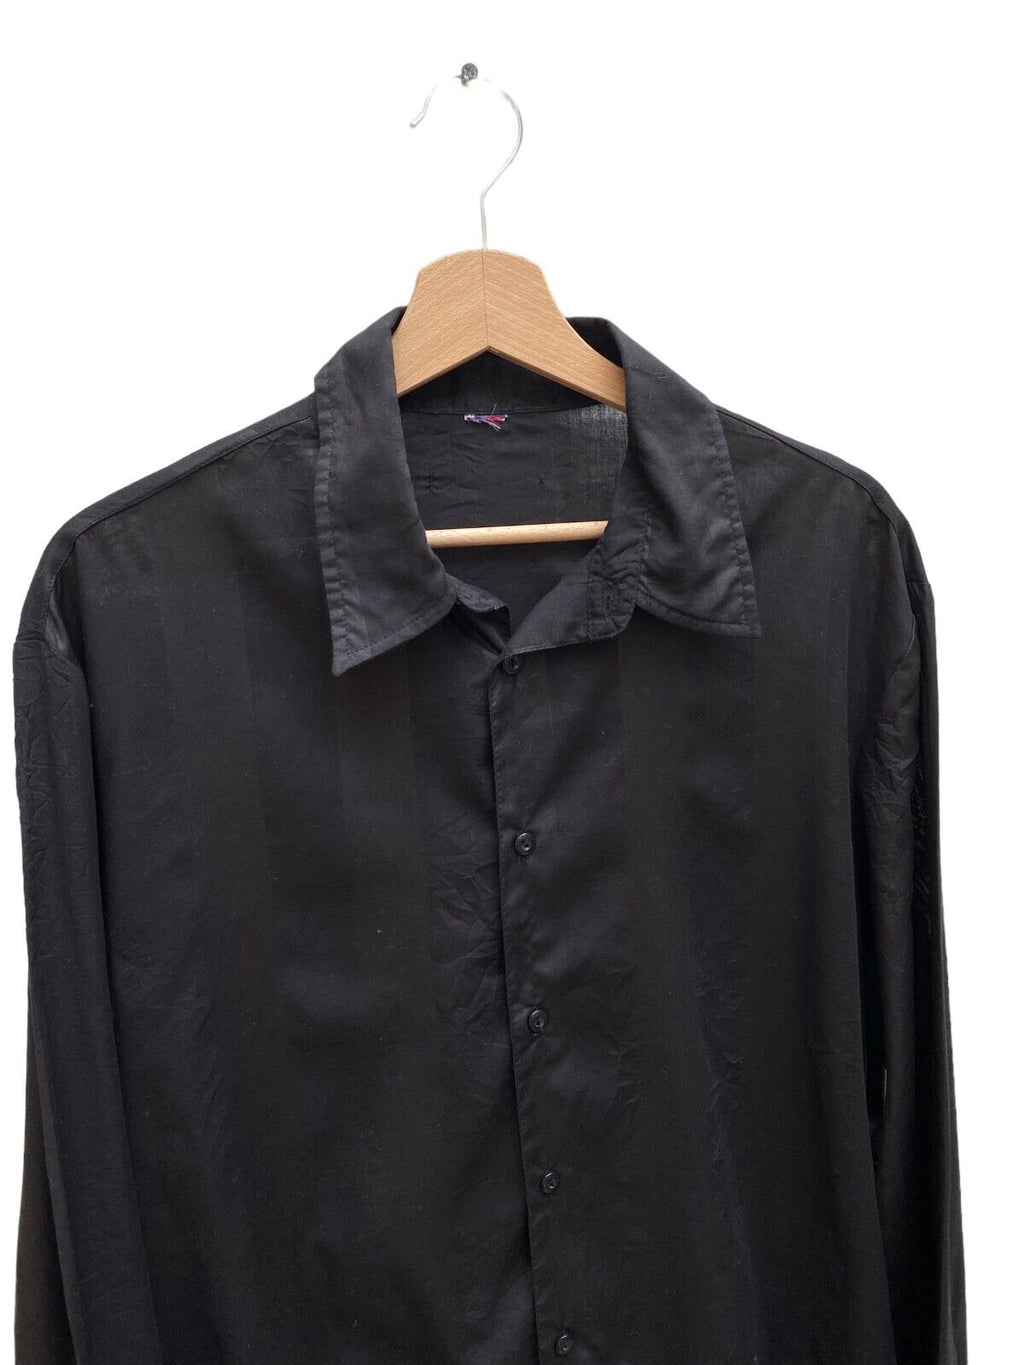 Vintage Black Silk Like Shirt  Size L